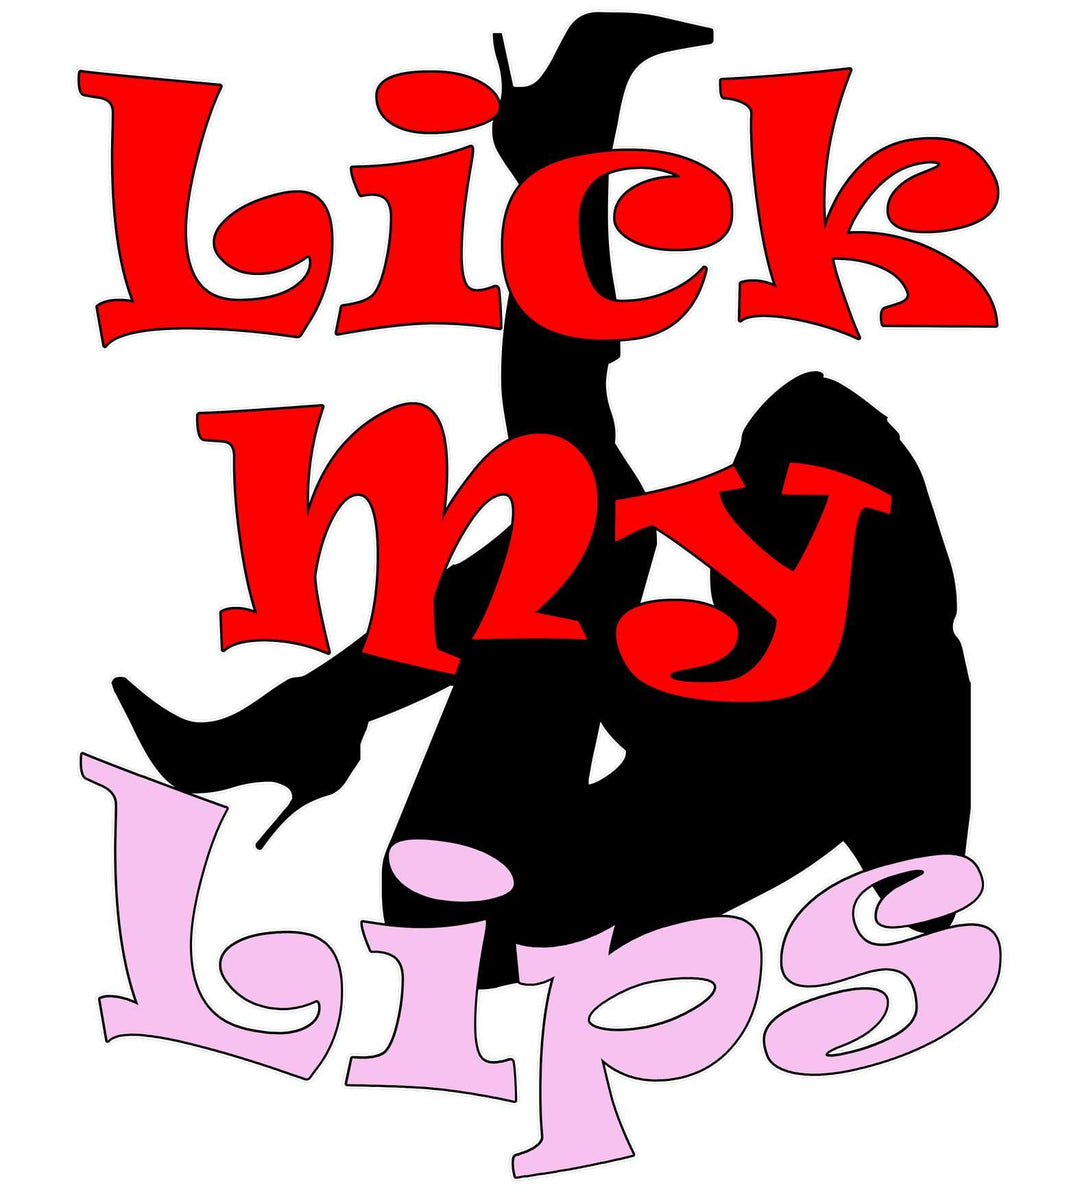 Lick My Lips - Witty Twisters T-Shirts